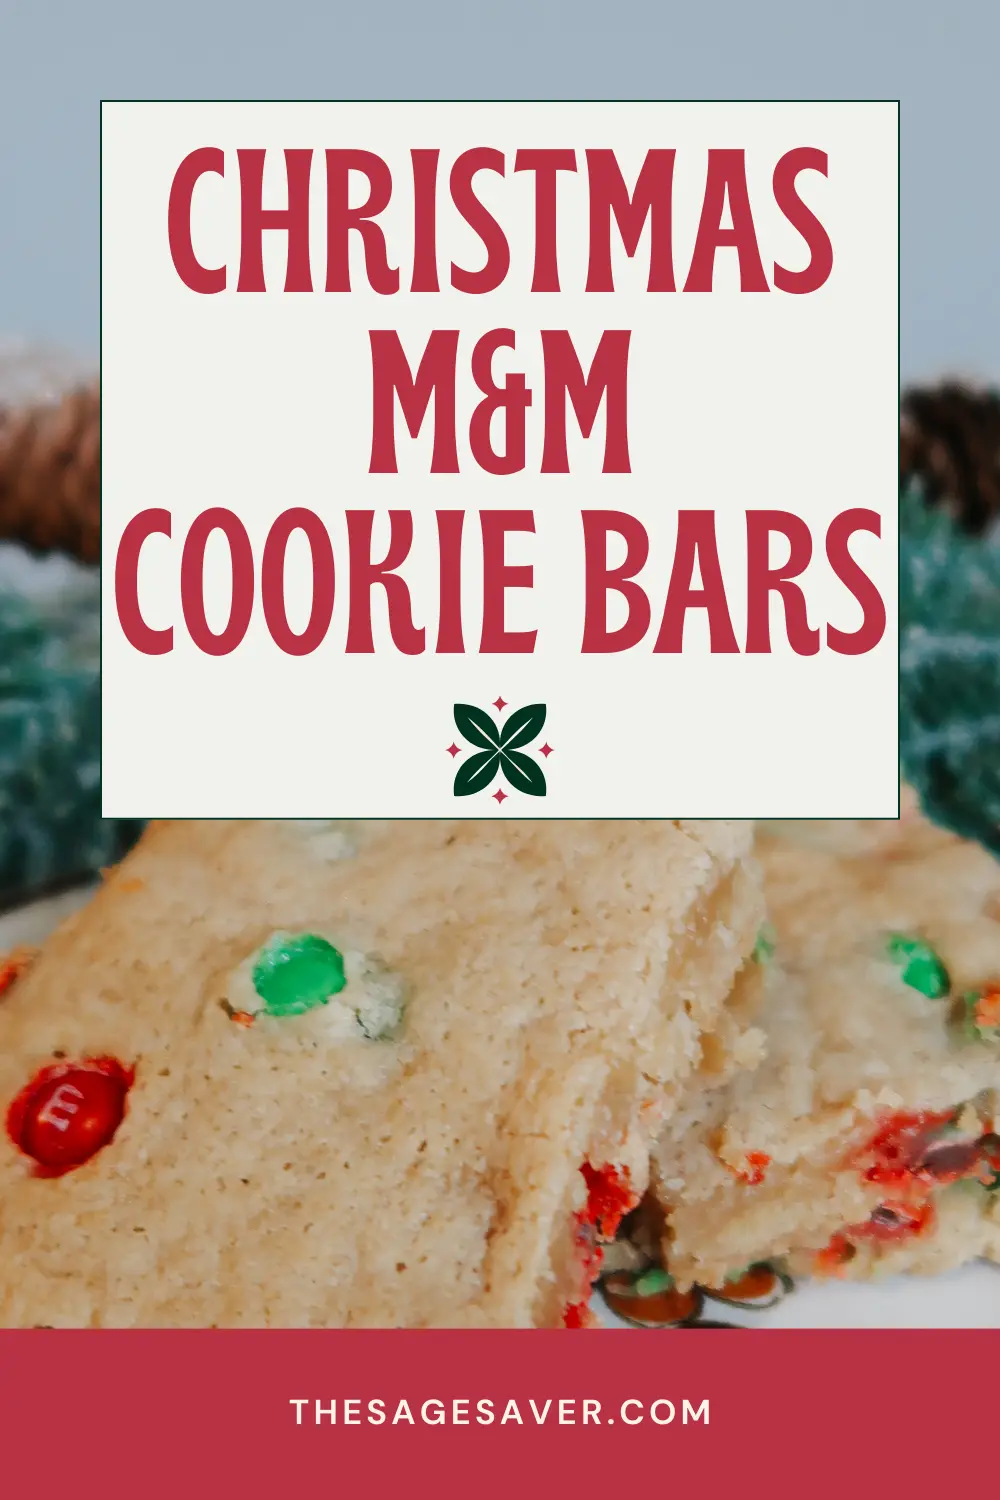 How to Make Christmas M&M Cookie Bars